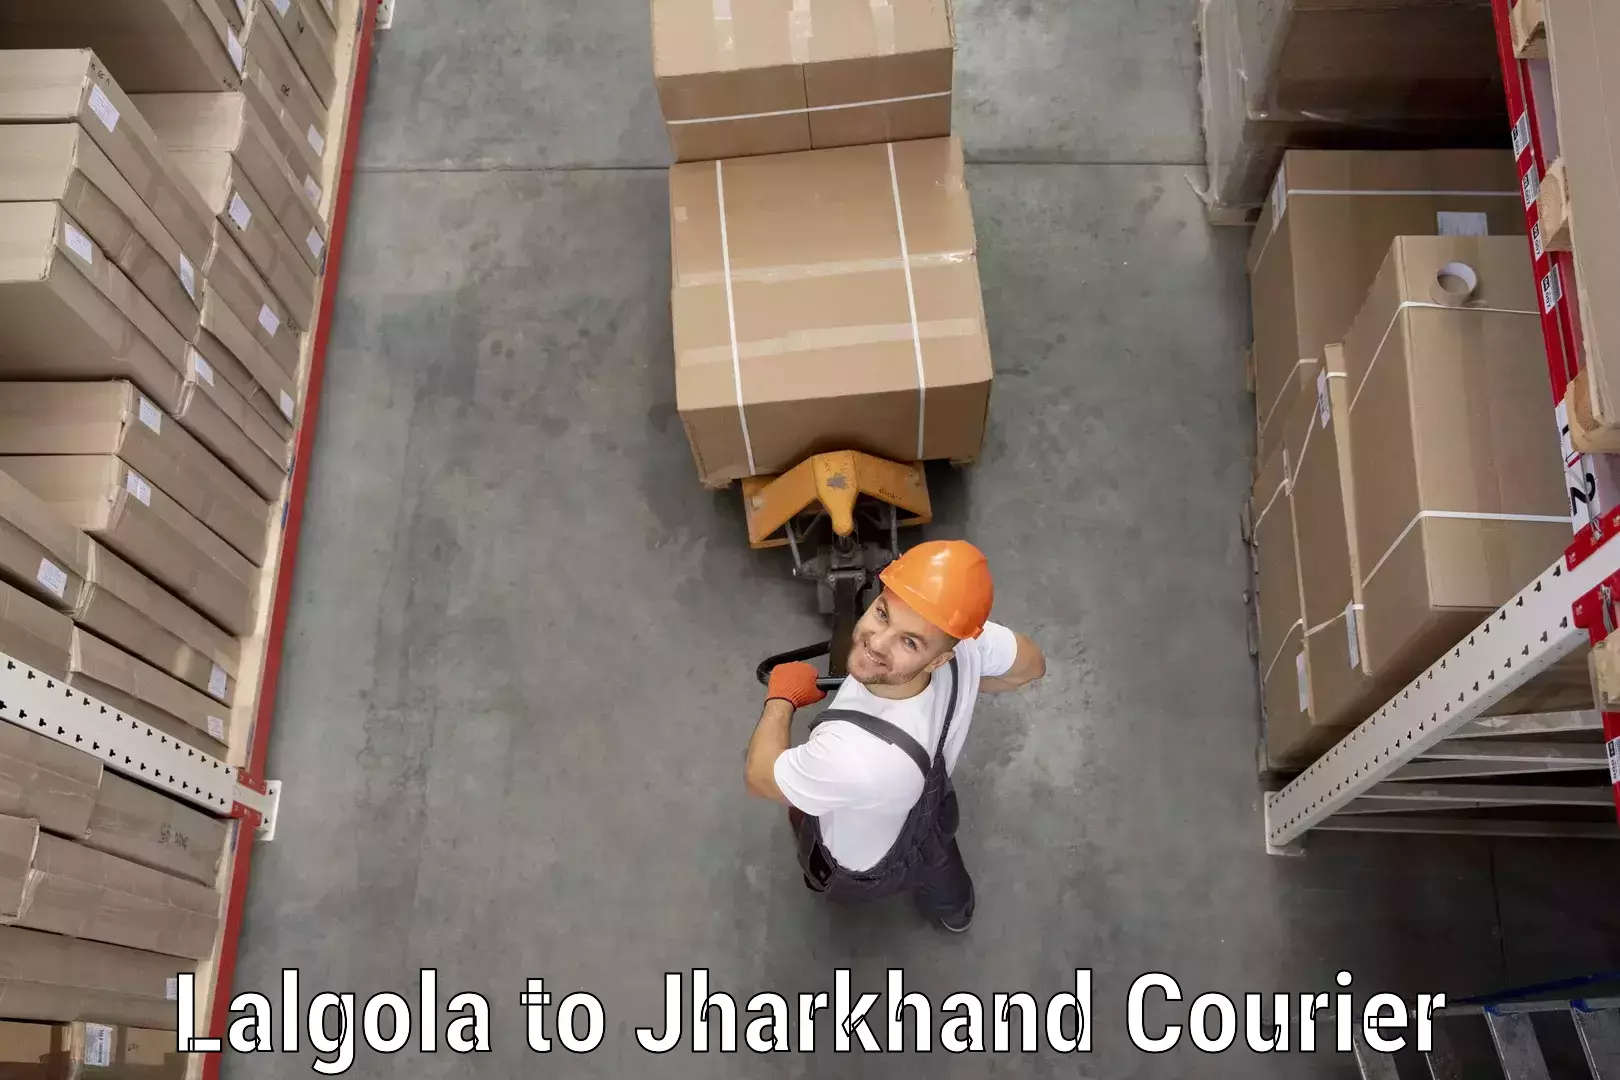 Customer-centric shipping Lalgola to Bokaro